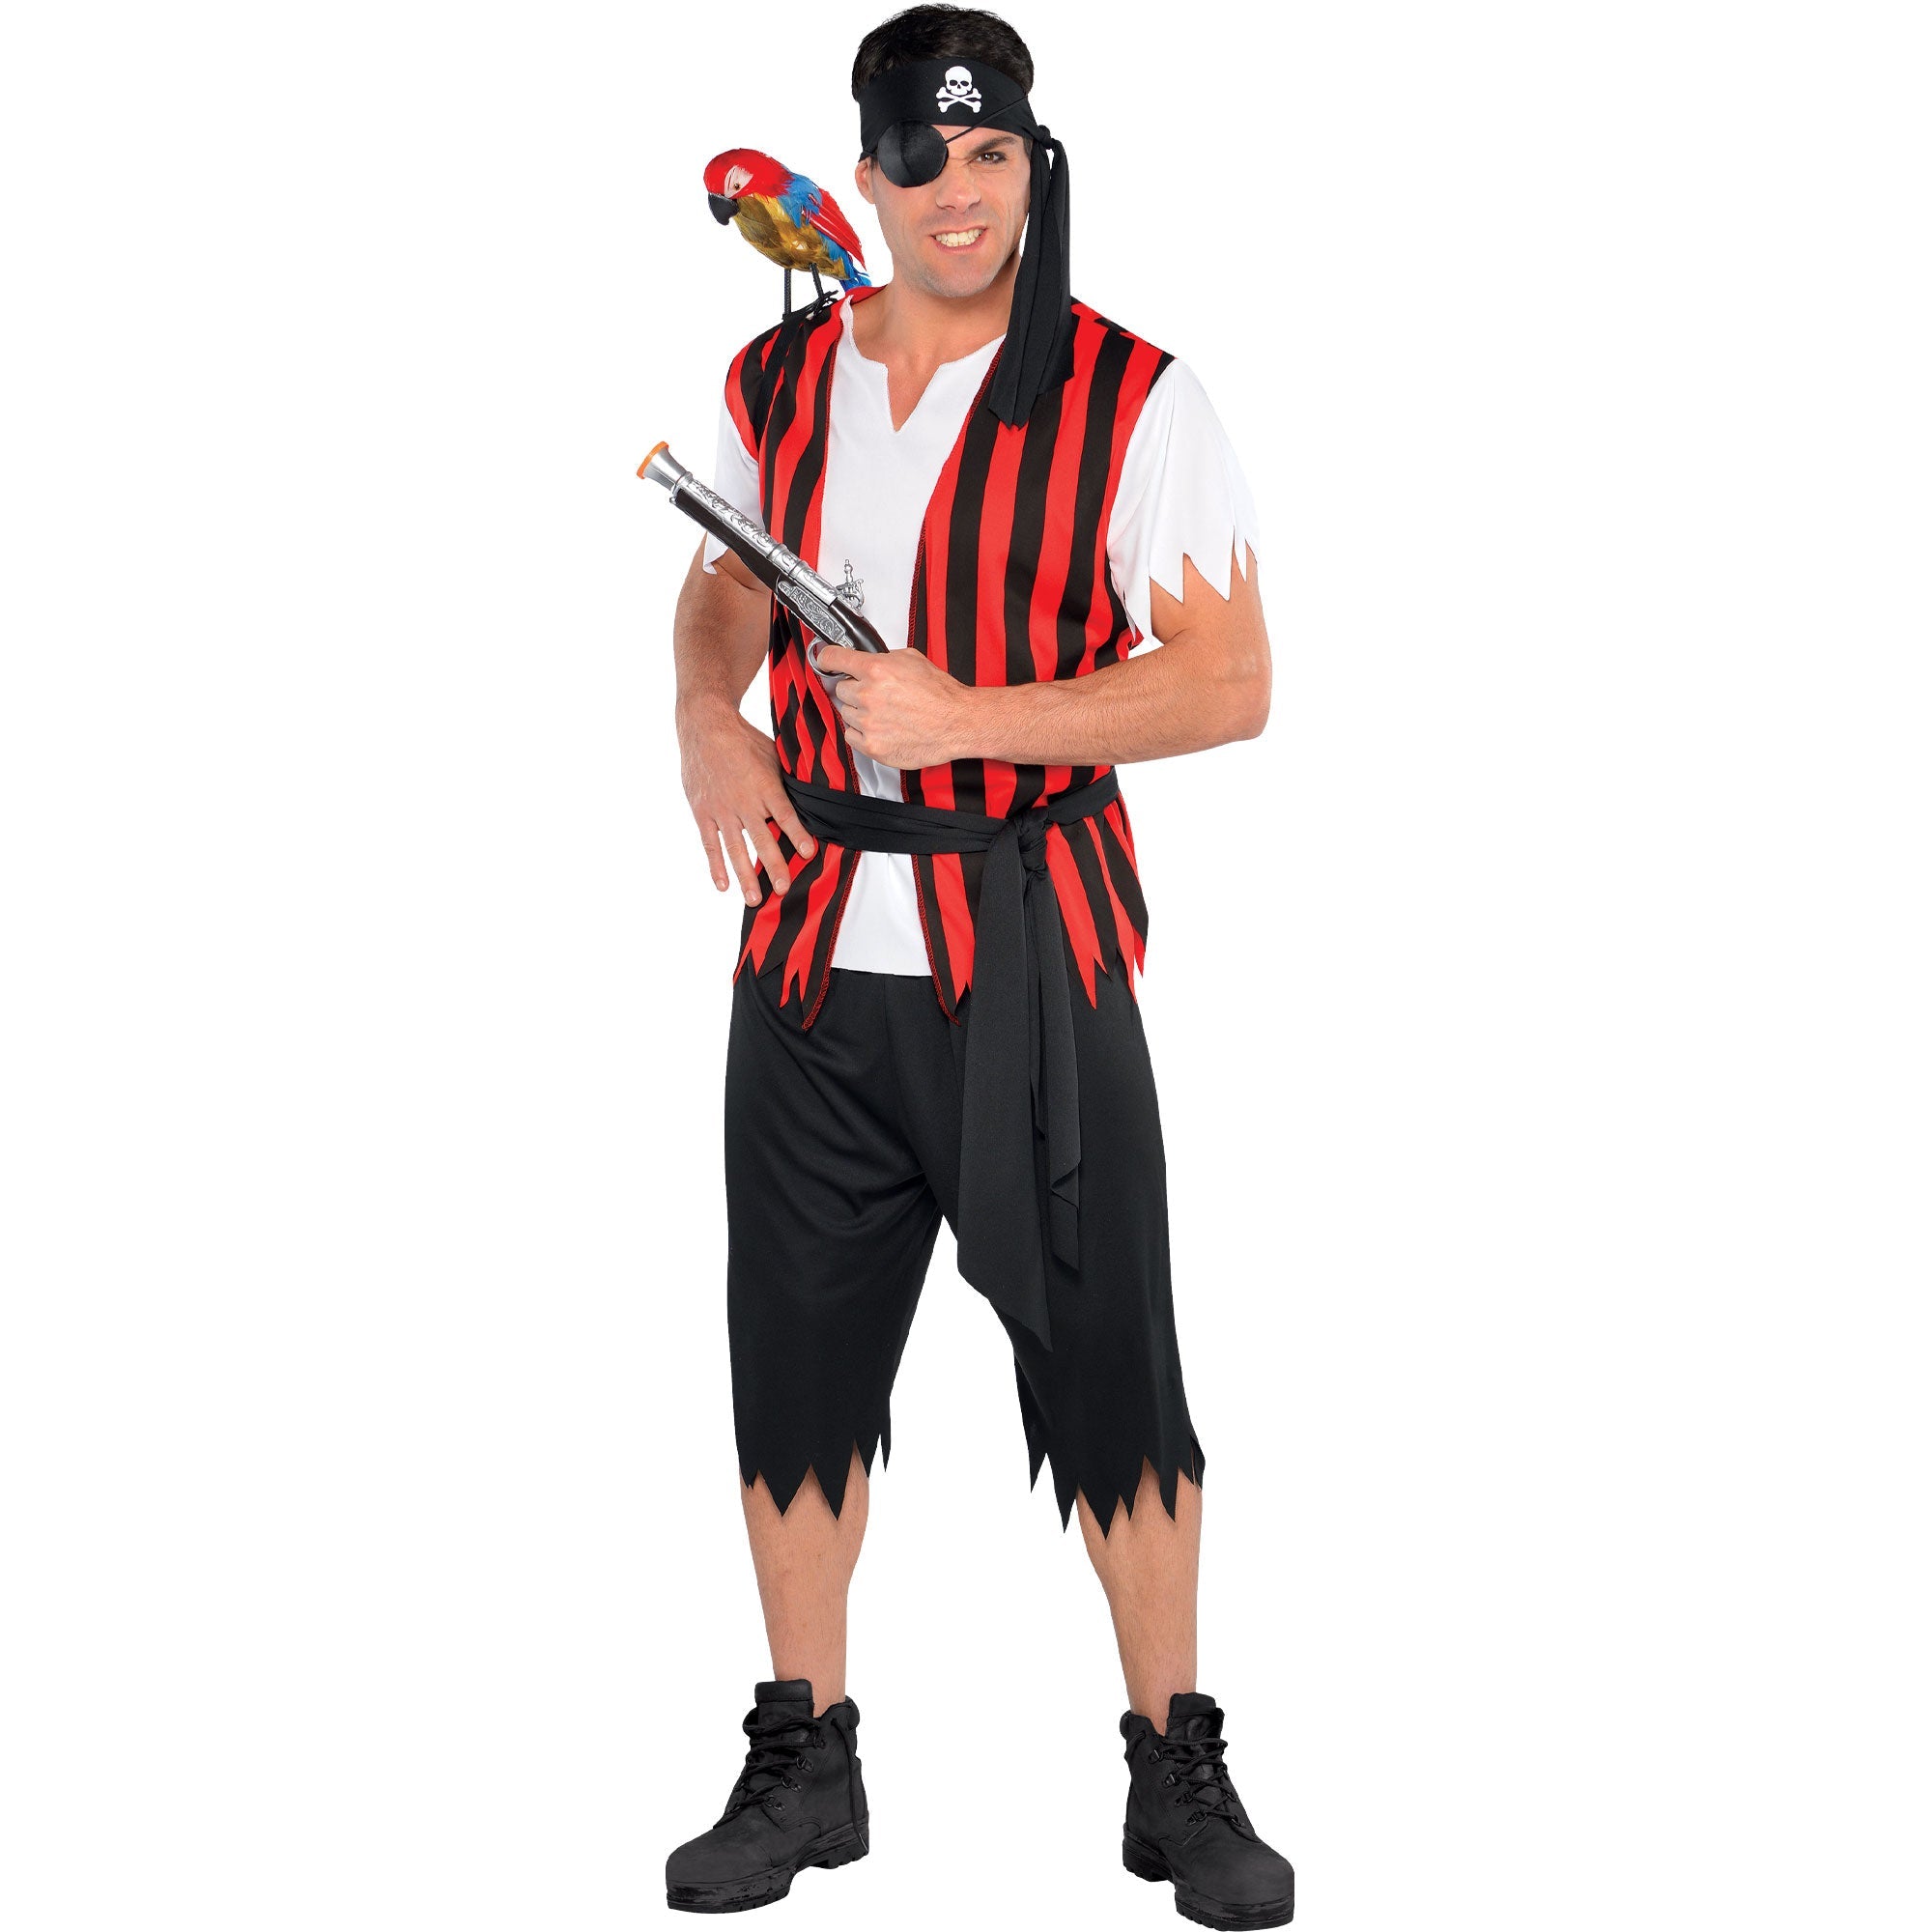 Costume Ahoy Matey Pirate - Adult